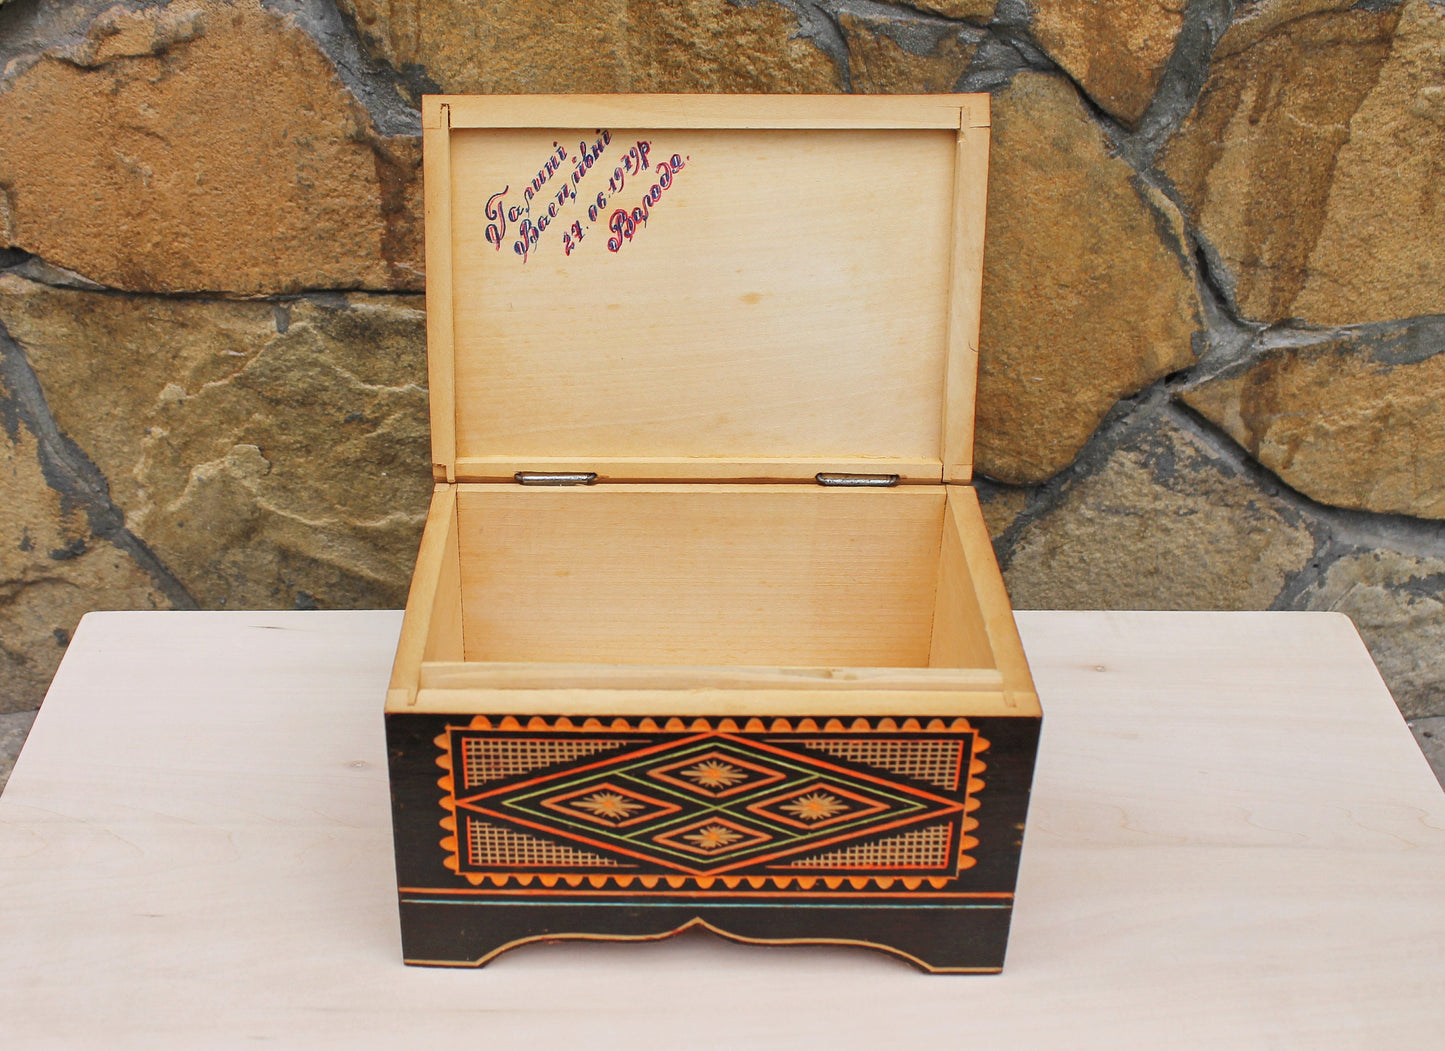 Vintage wooden box - made in Ukraine vintage jewelry box - 1970s